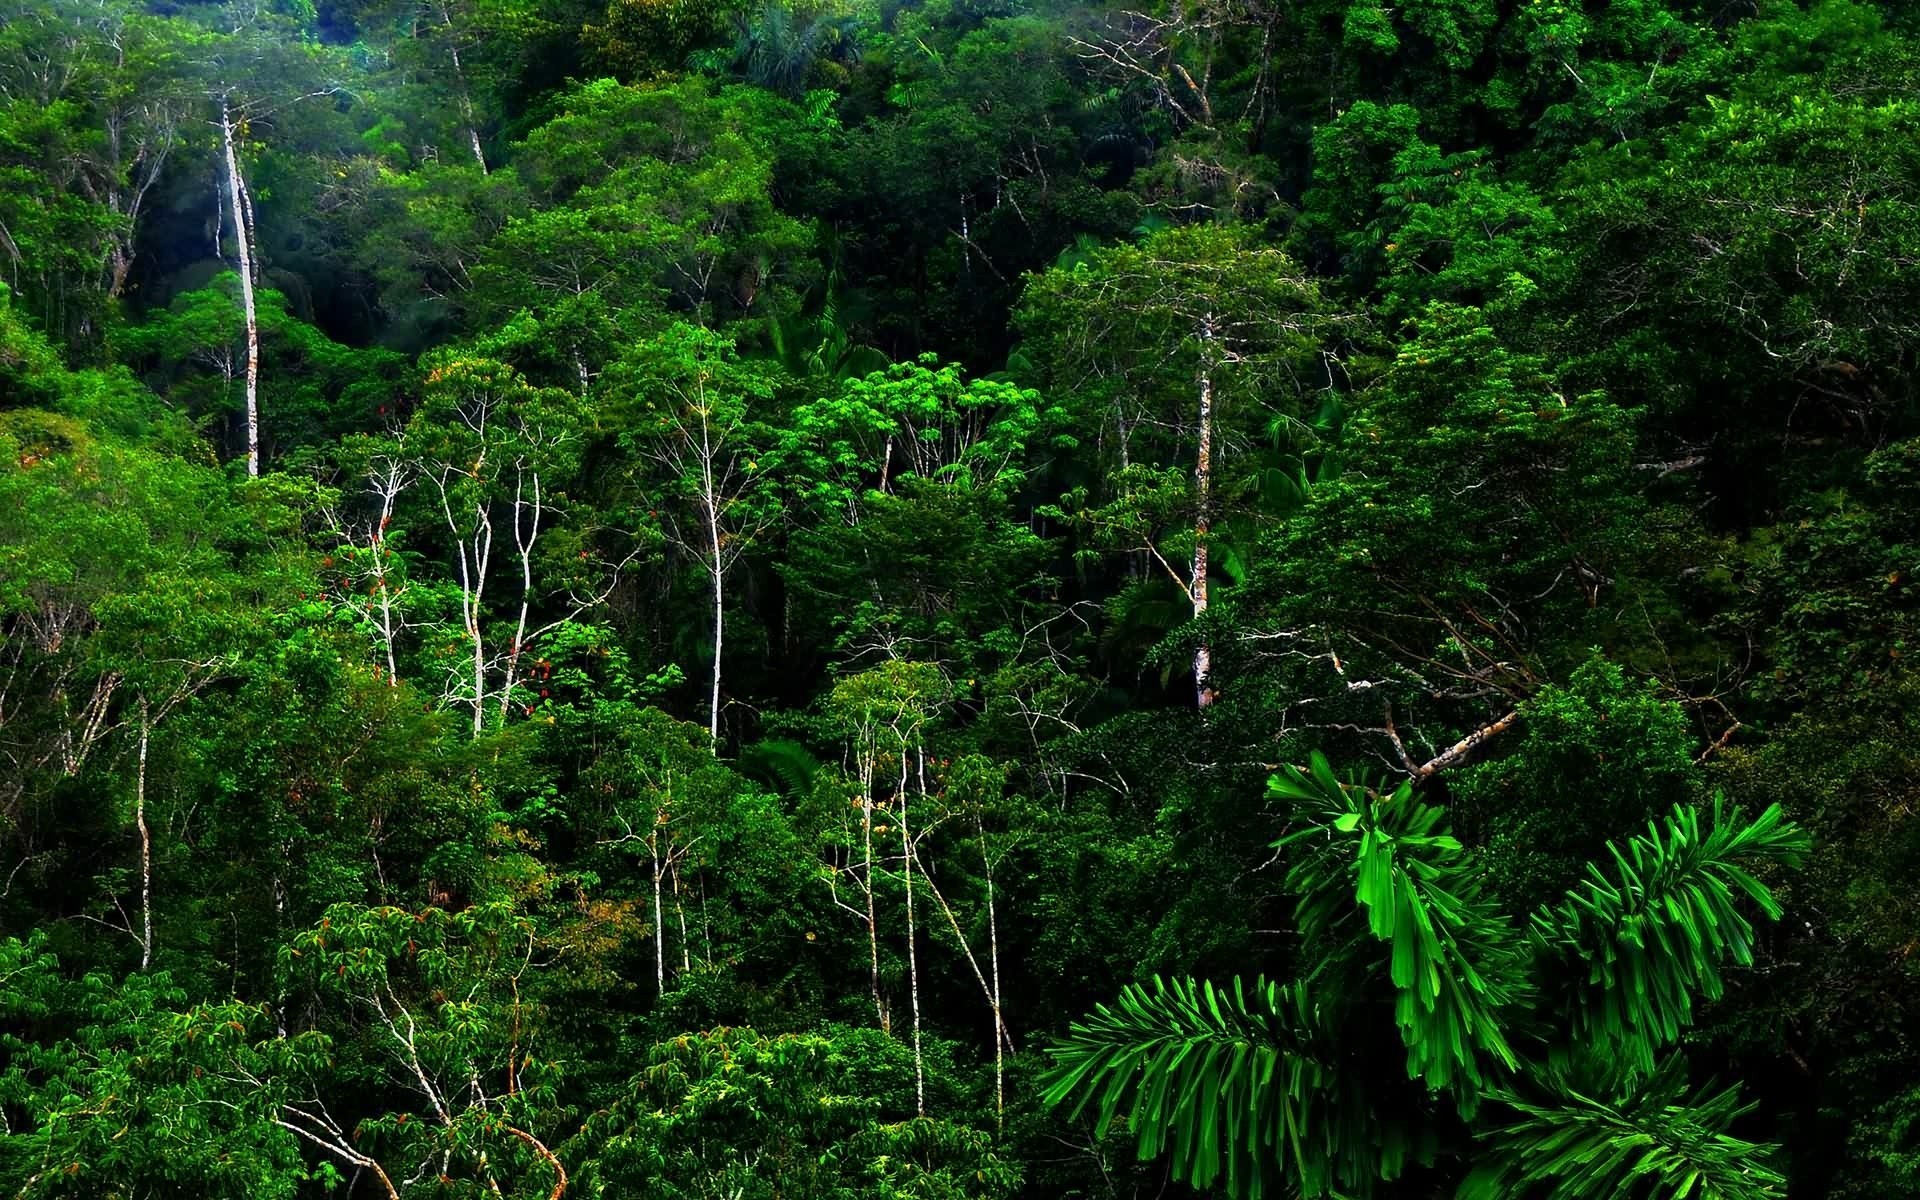 Tropical Rainforest Wallpaper 58 Pictures